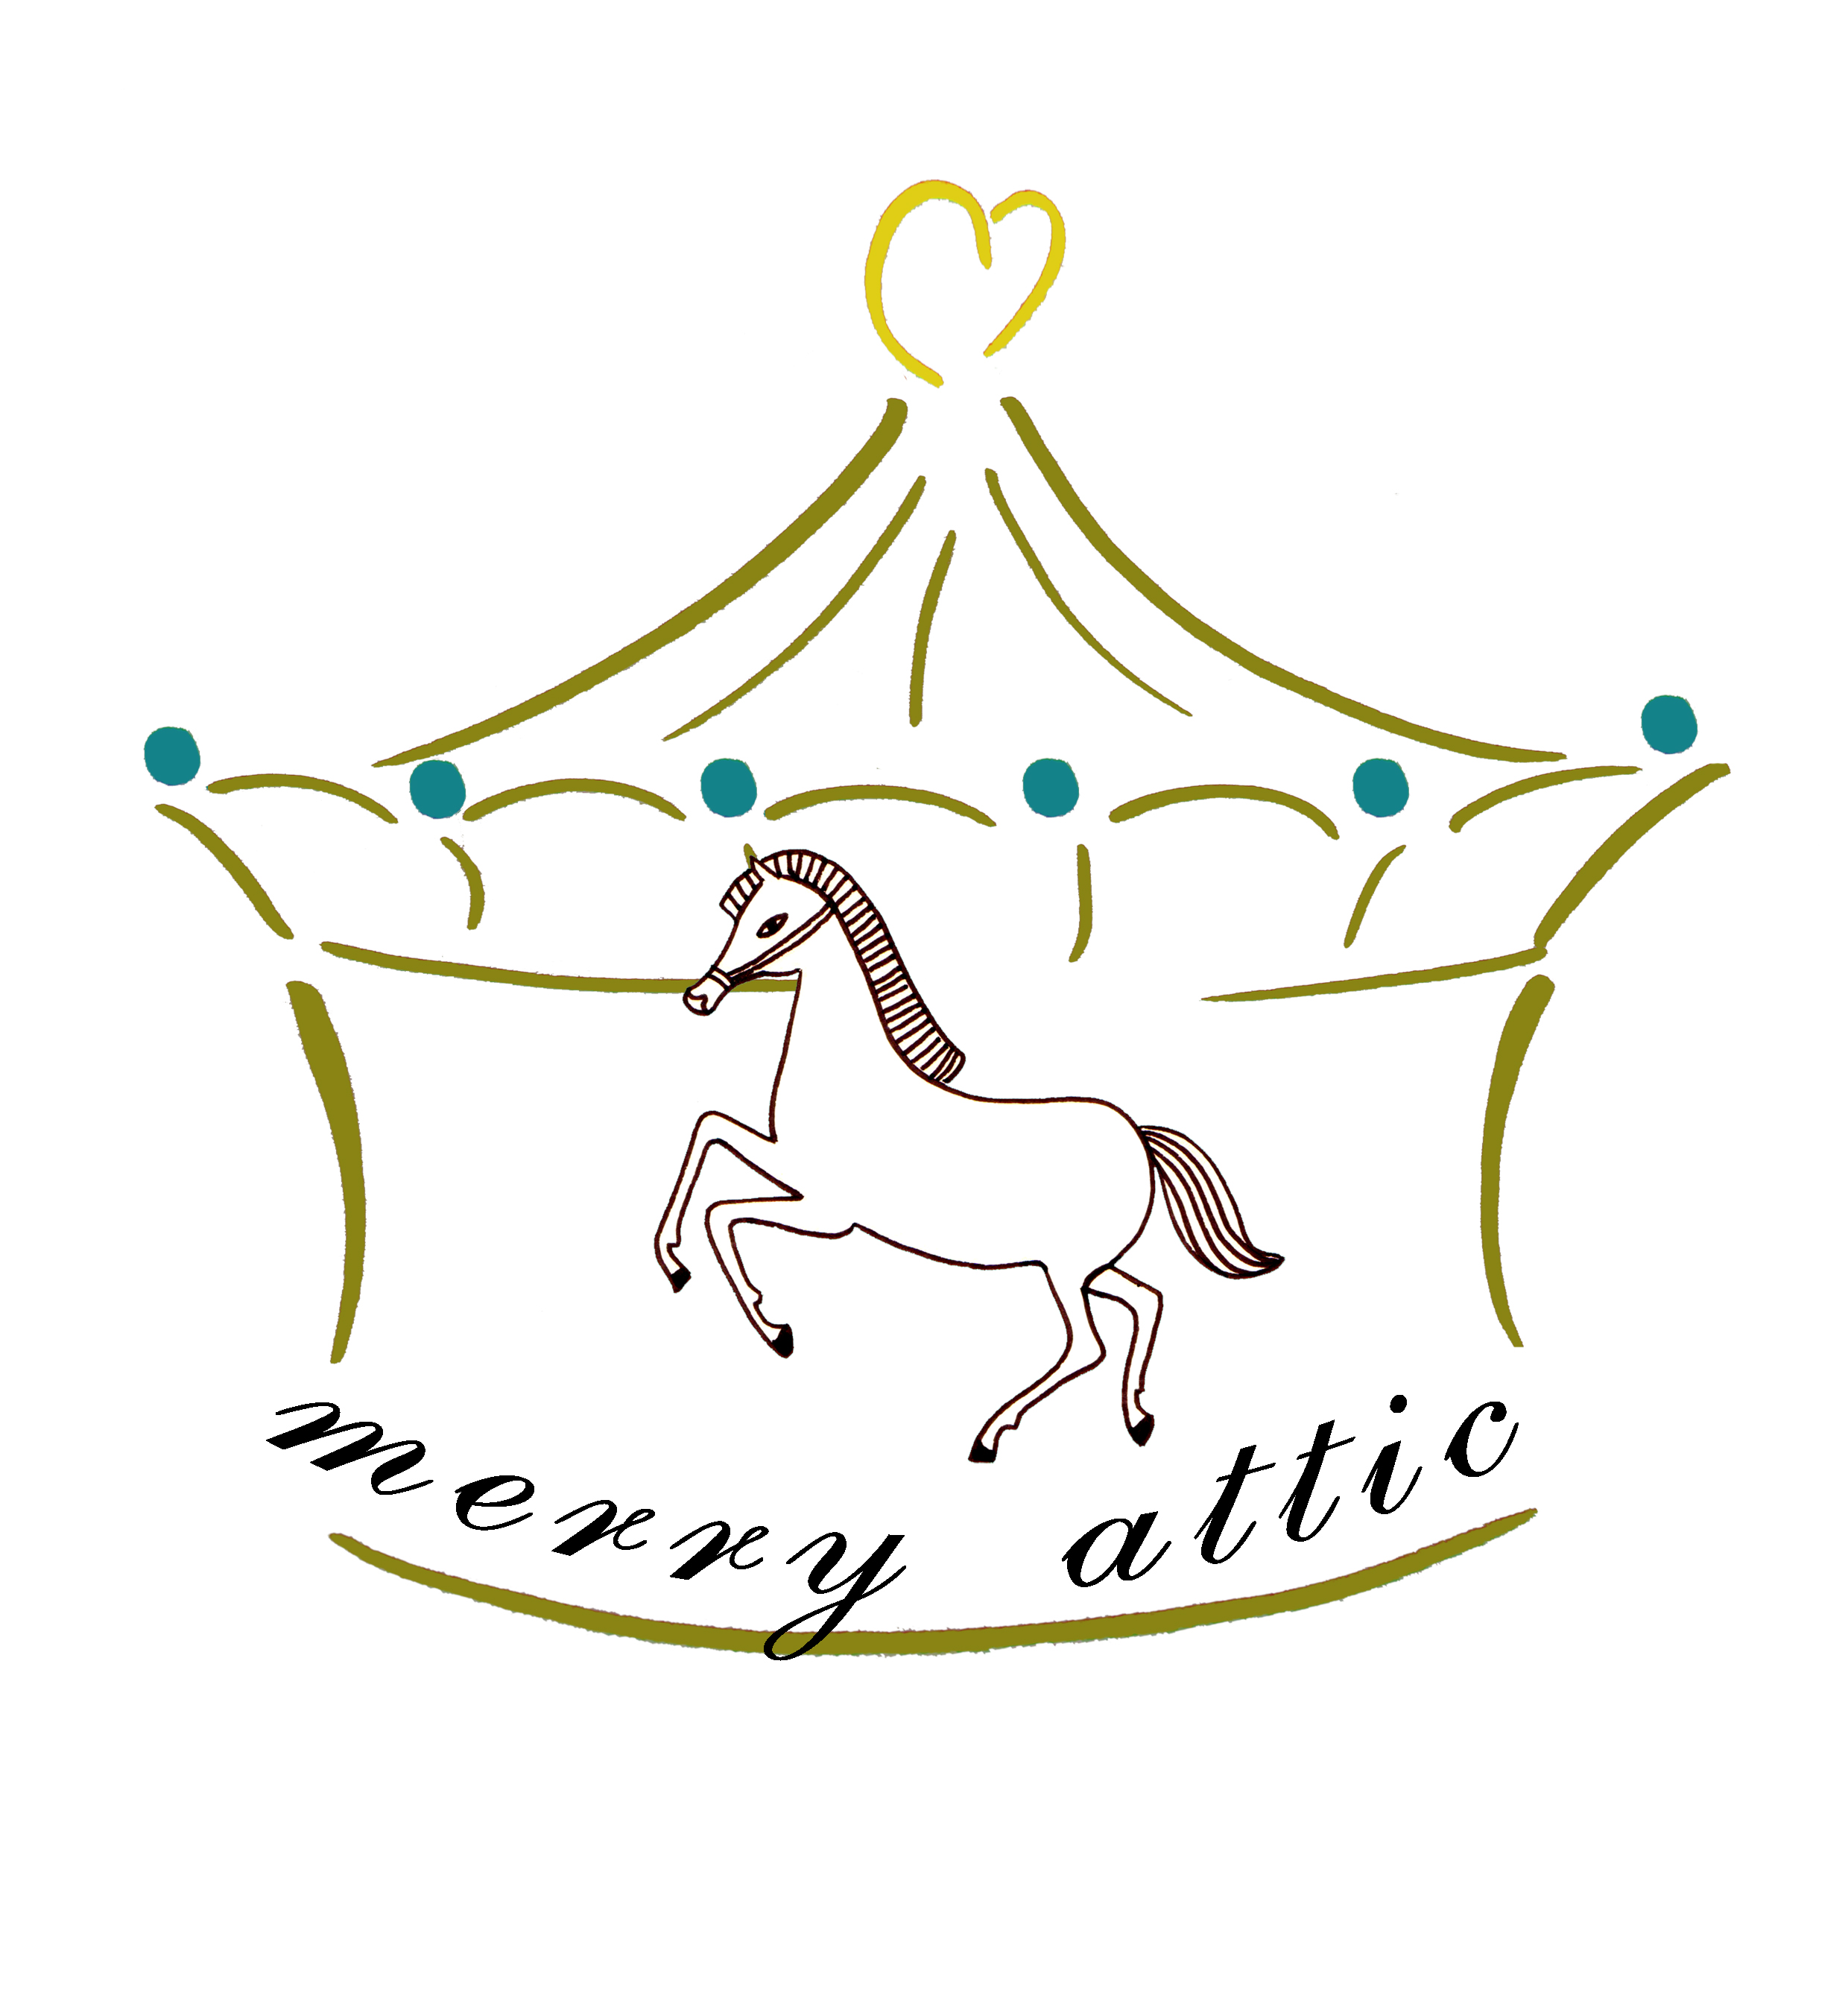 merry attic初ブログです！